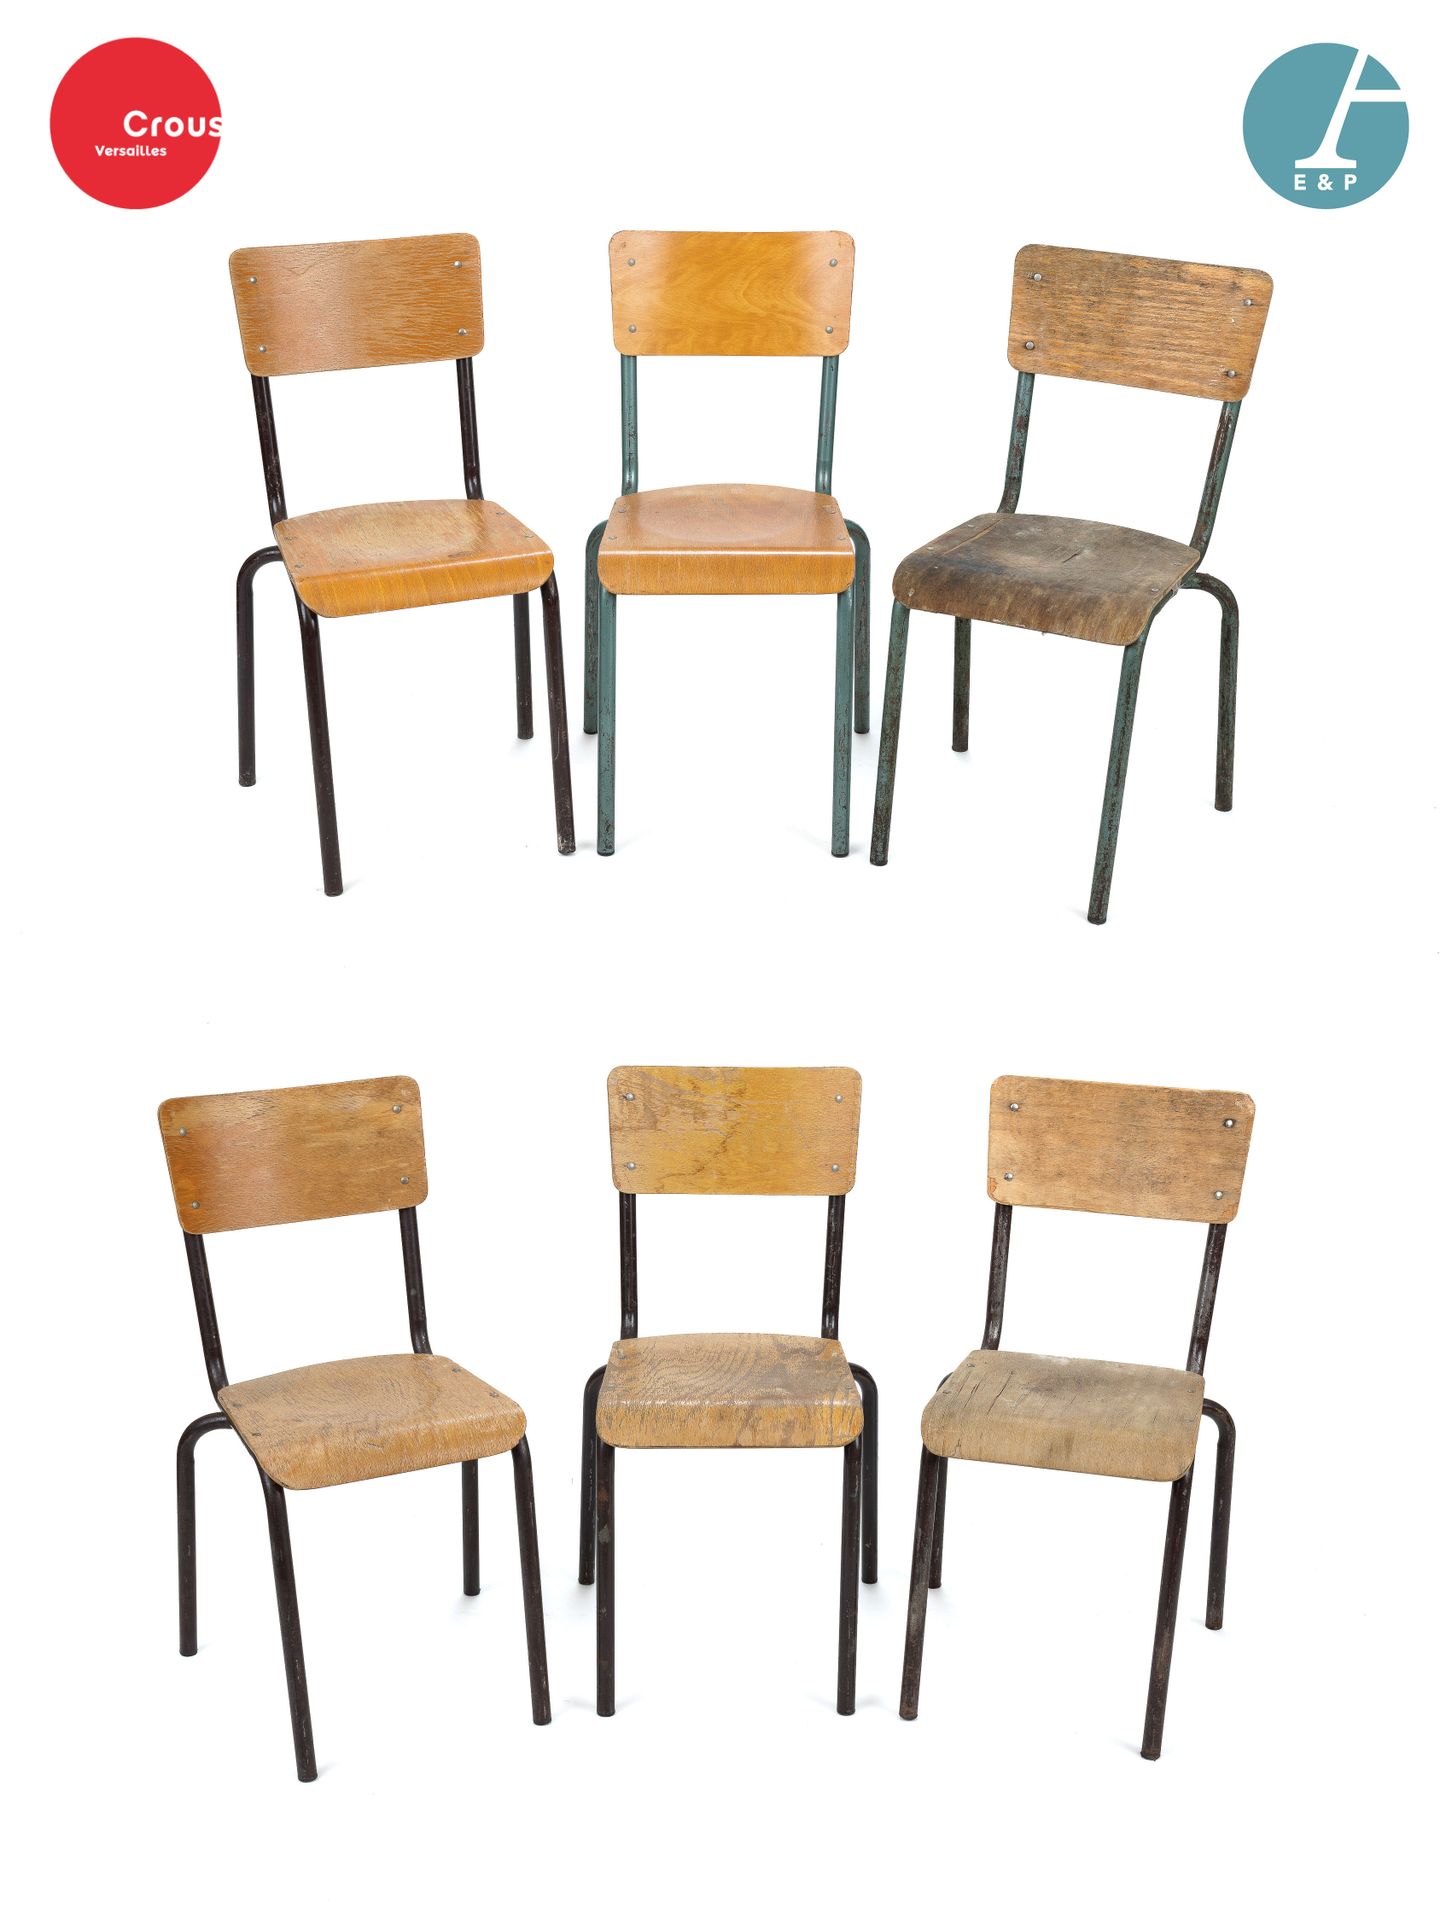 Null 凡尔赛学院收藏的 "Mobilor"（归属）。

为安东尼的让-扎伊大学宿舍配备的家具

6把学生椅的套间。

黑漆管状金属腿；热成型胶合板的座椅和椅&hellip;